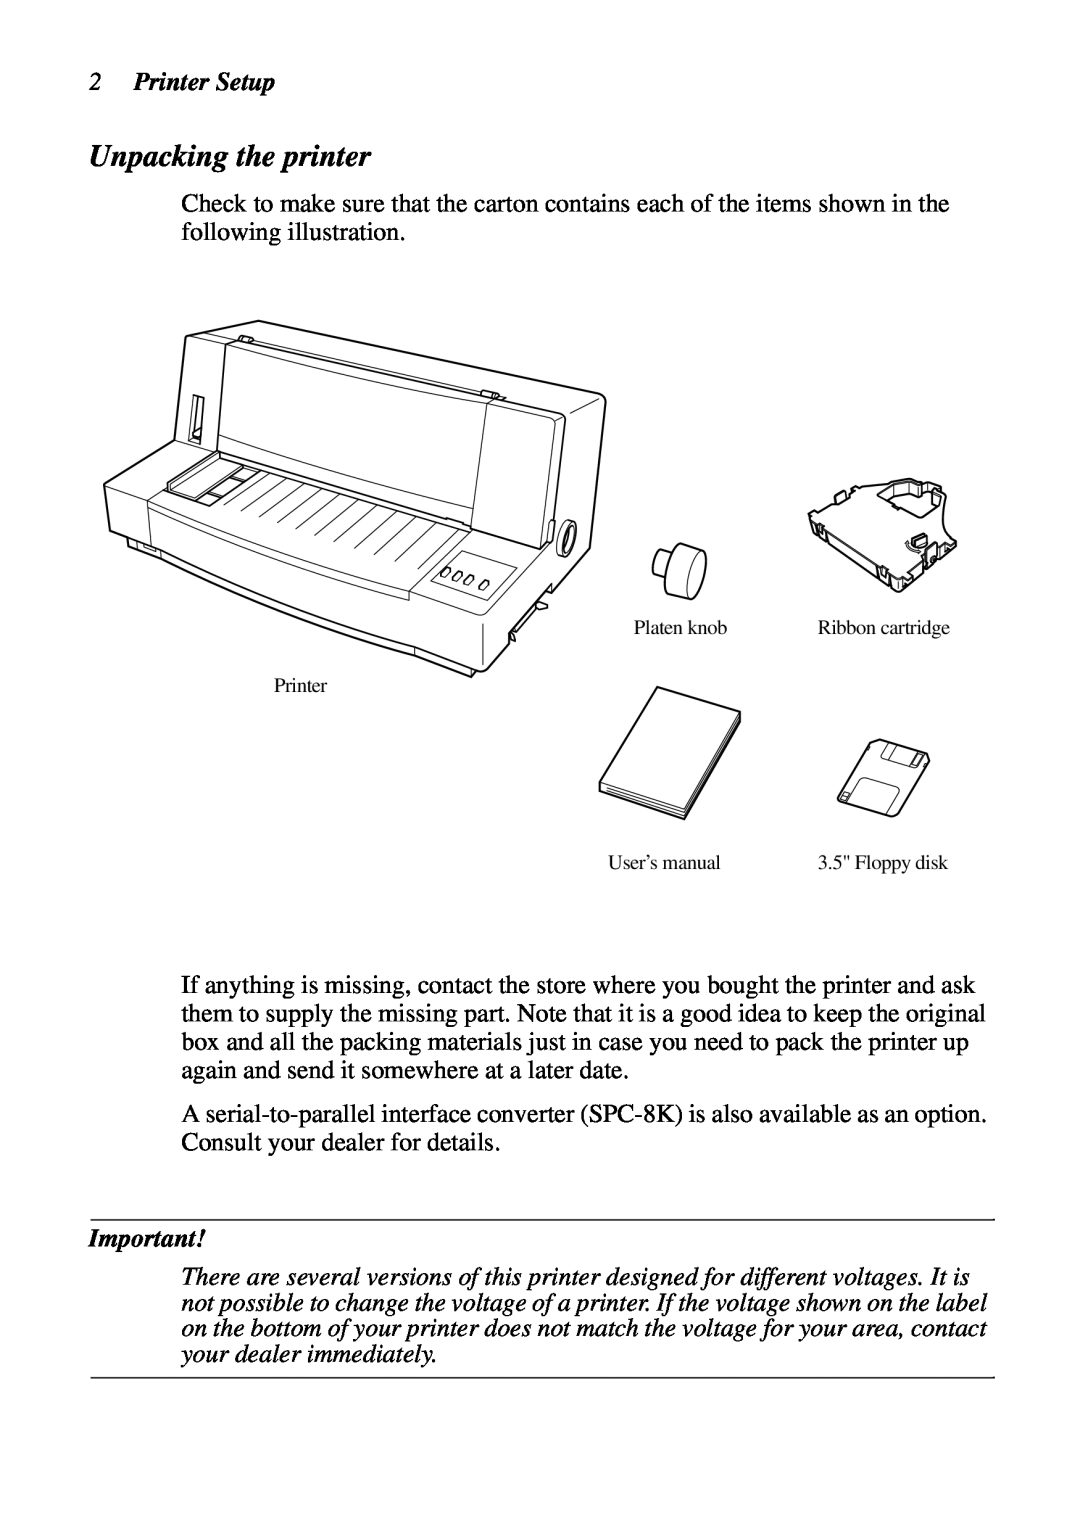 Star Micronics LC-7211 user manual Unpacking the printer, Printer Setup 